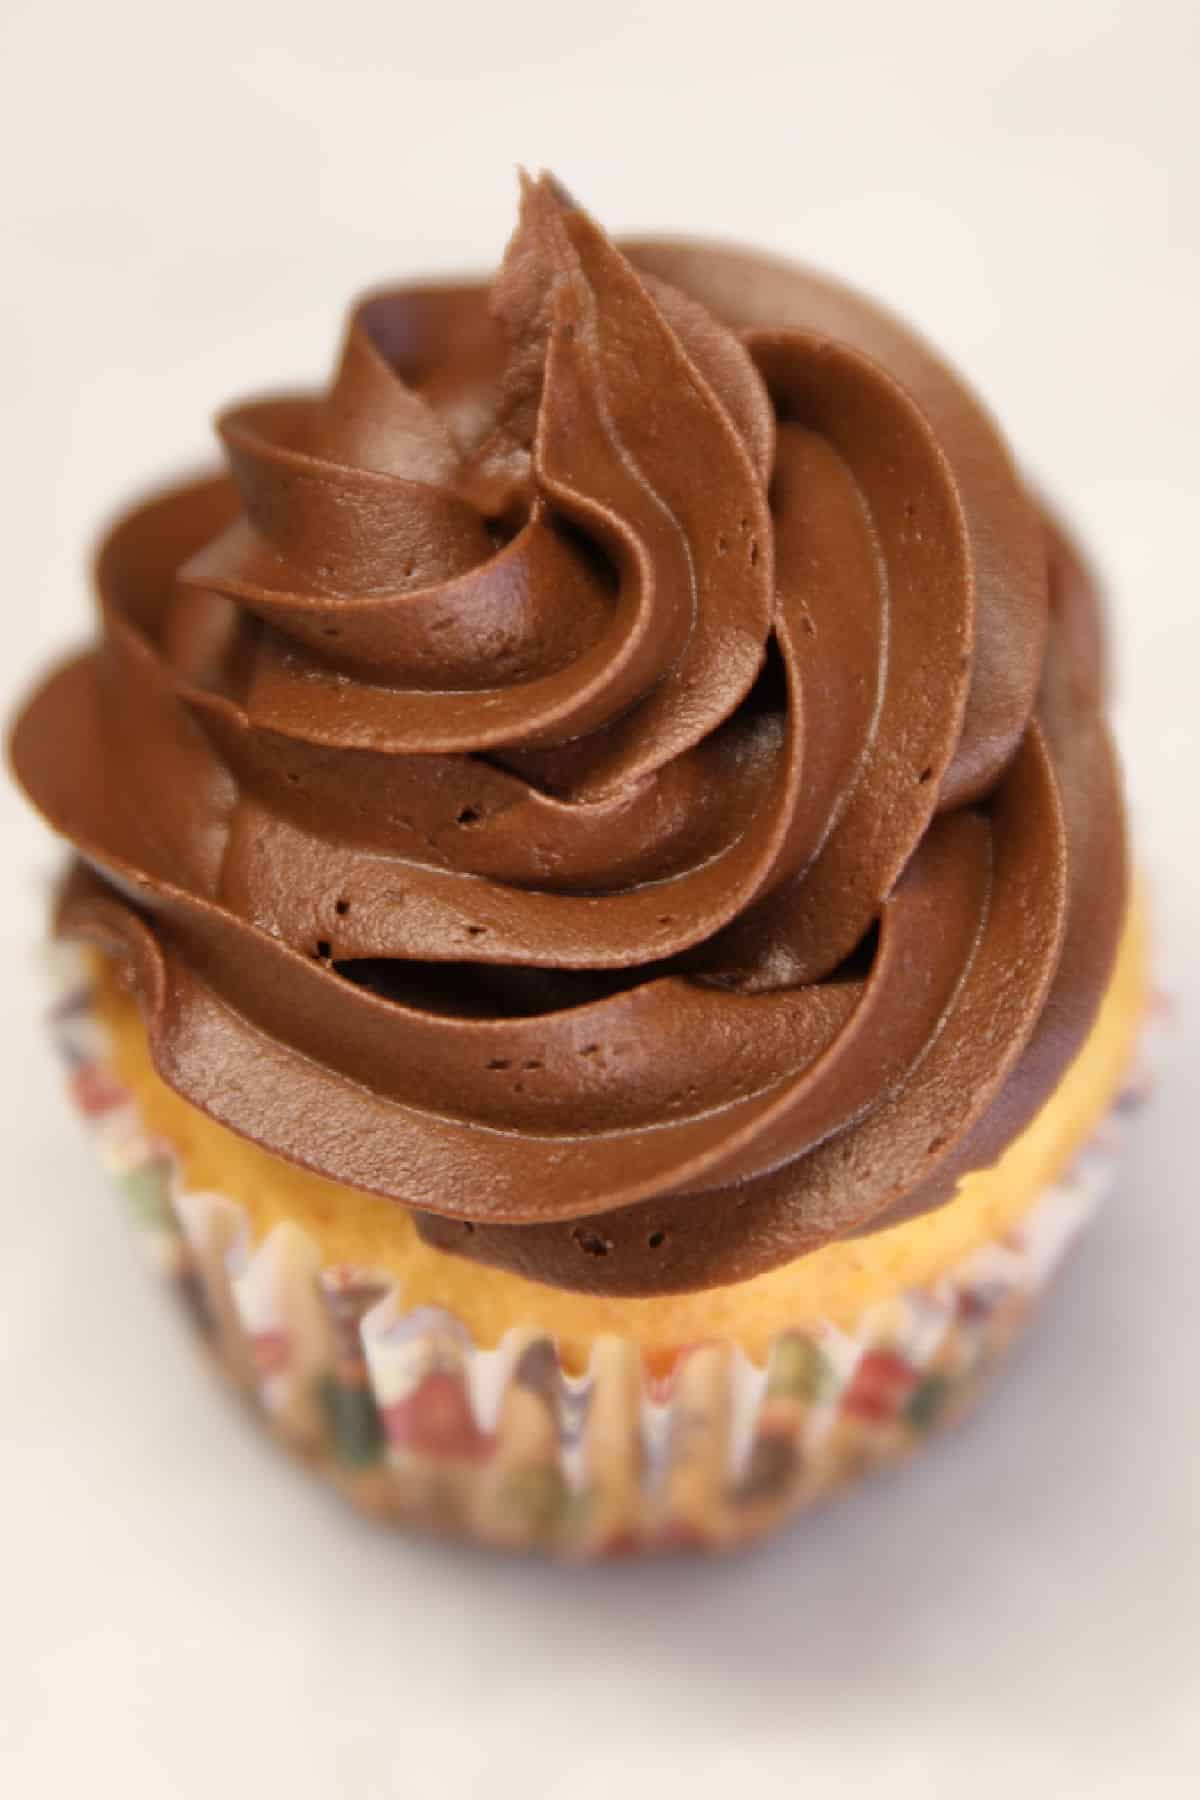 Chocolate cupcake with chocolate icing.